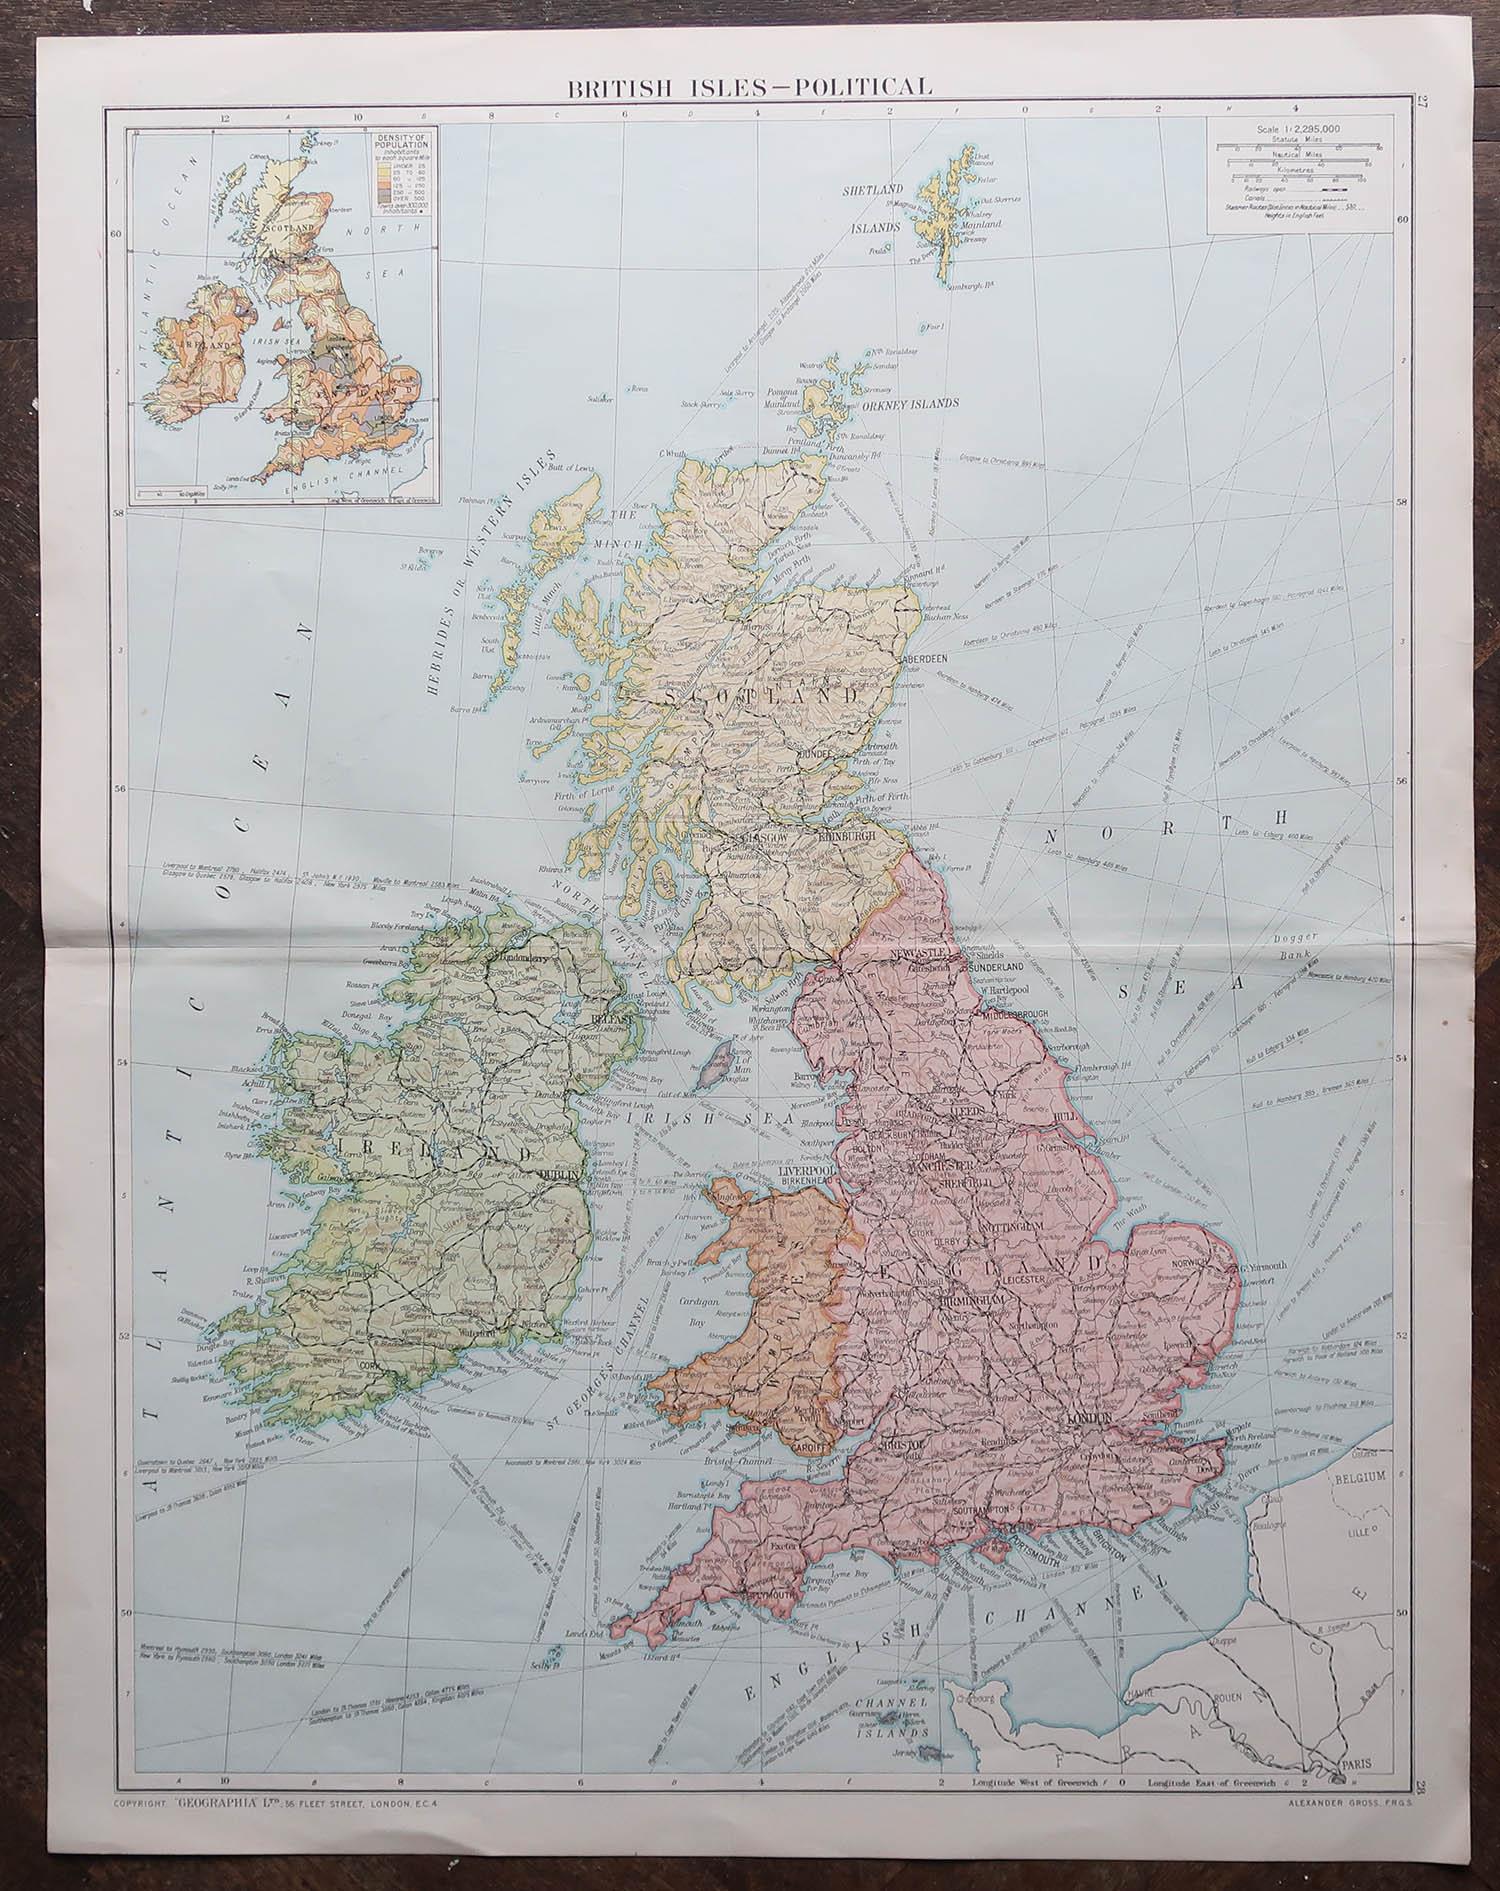 4 kingdoms of england map